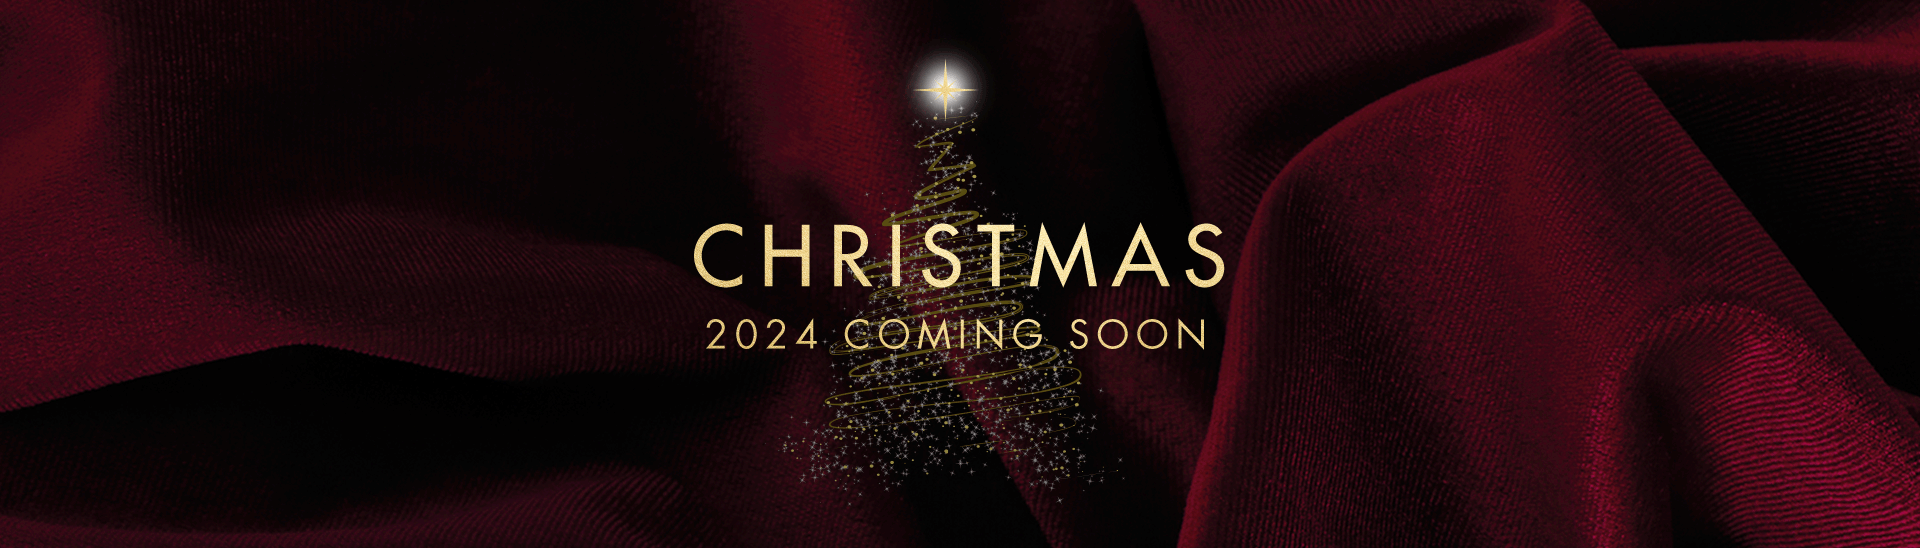 Christmas 2024 at Hertfordshire